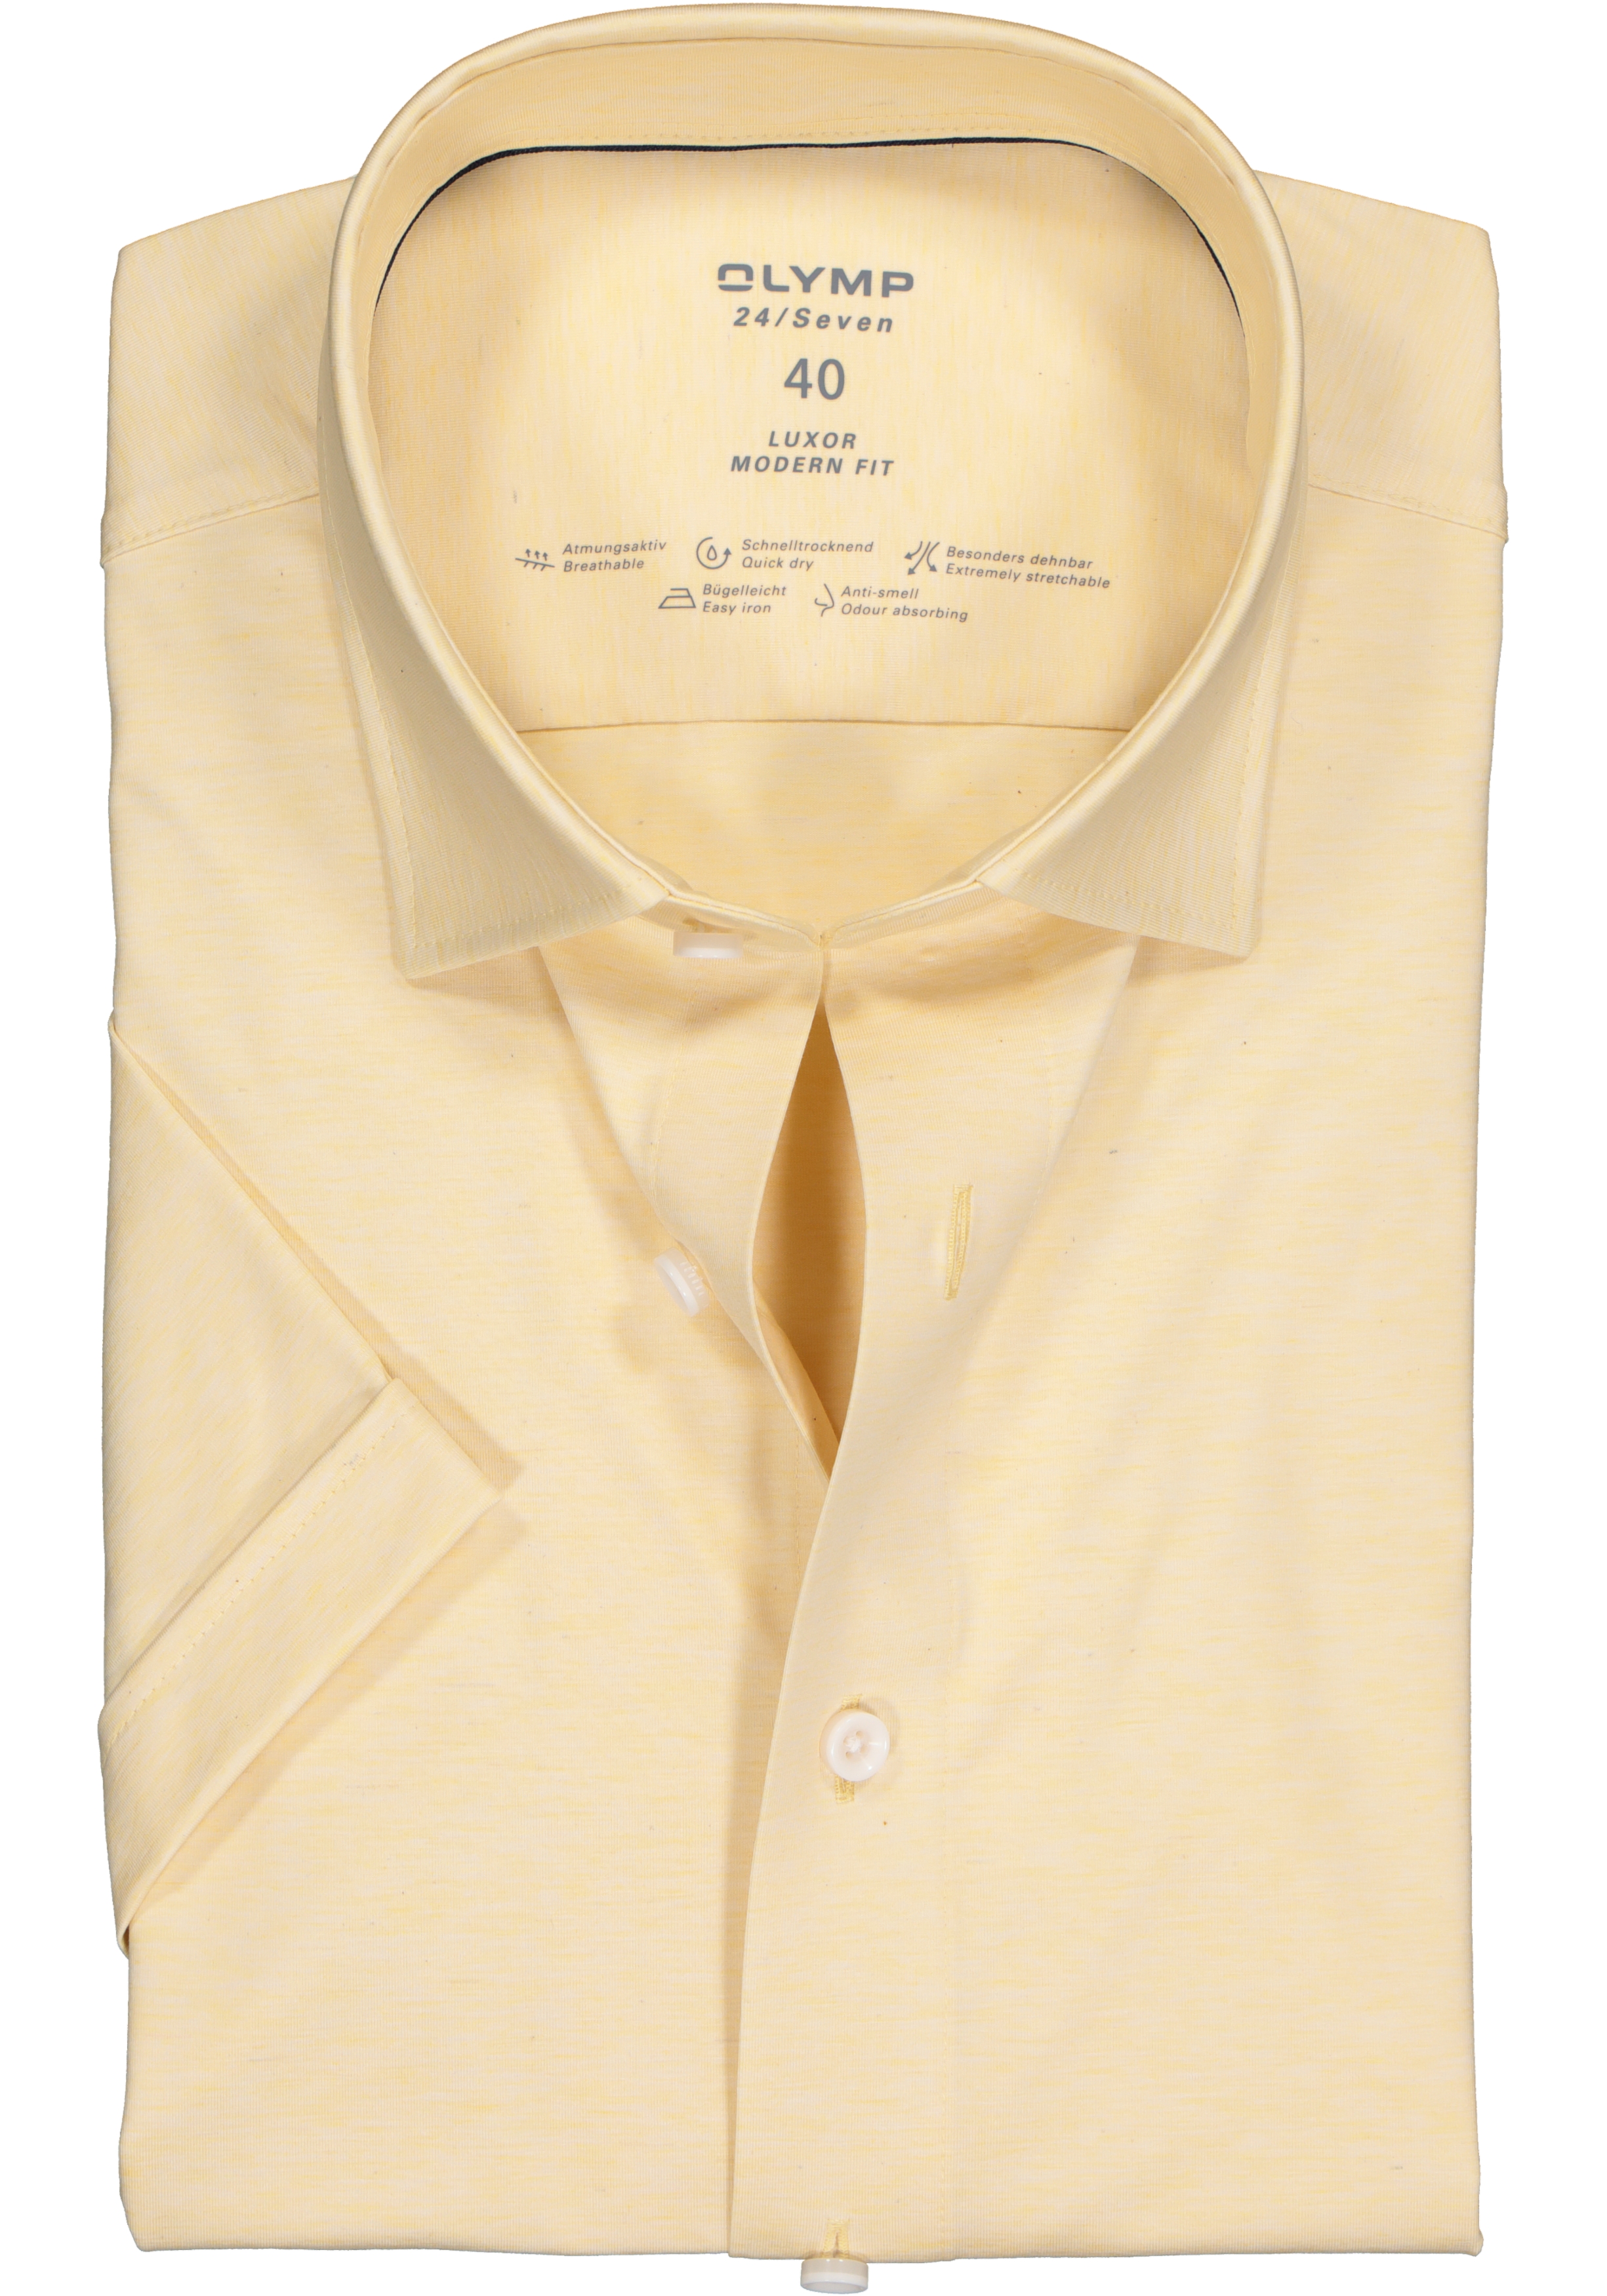 OLYMP Luxor modern fit overhemd 24/7, korte mouw, geel tricot